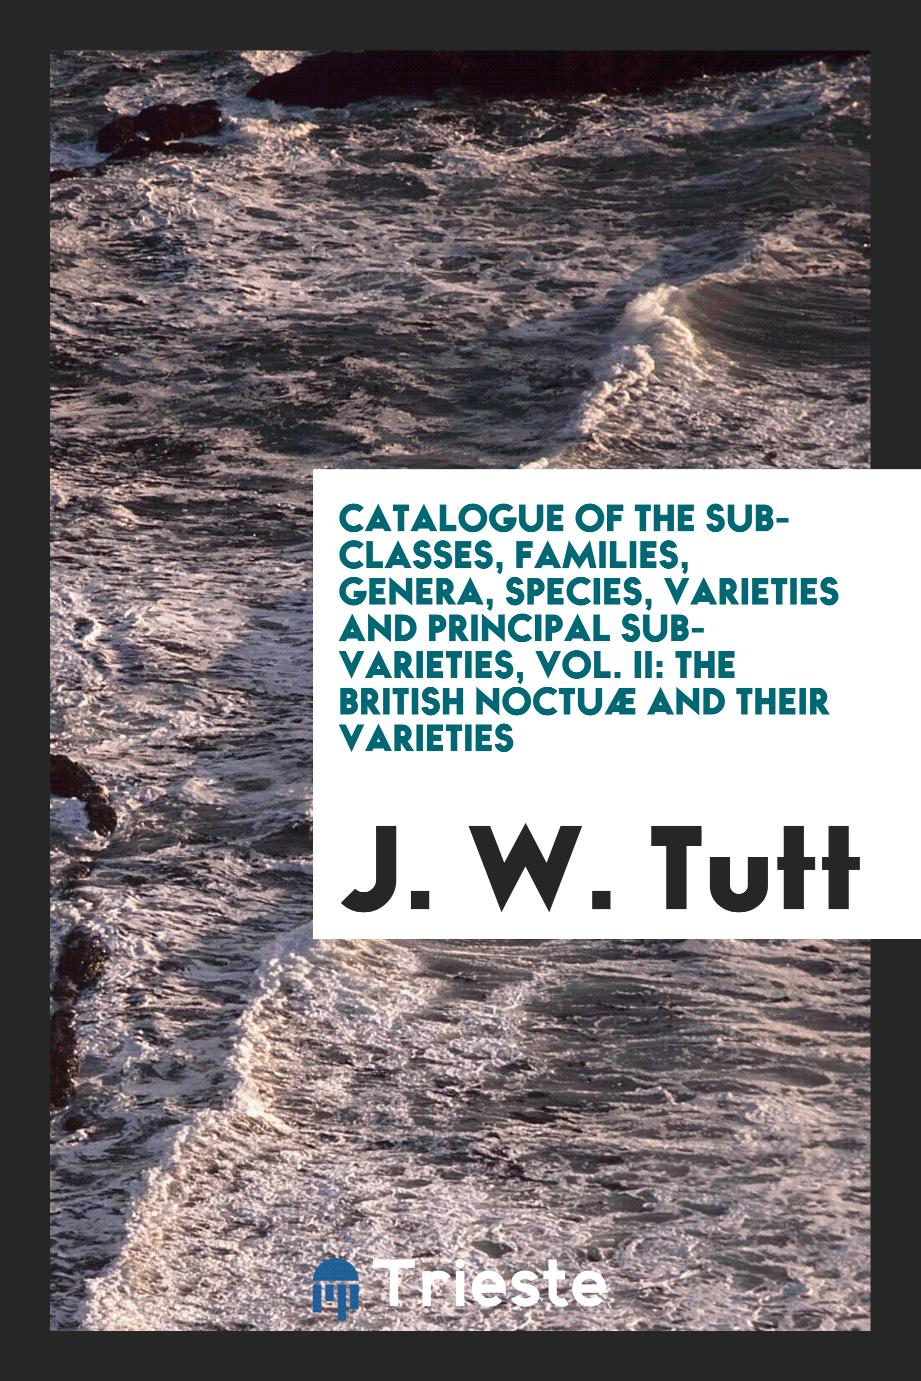 Catalogue of the sub-classes, families, genera, species, varieties and principal sub-varieties, Vol. II: The British noctuæ and their varieties